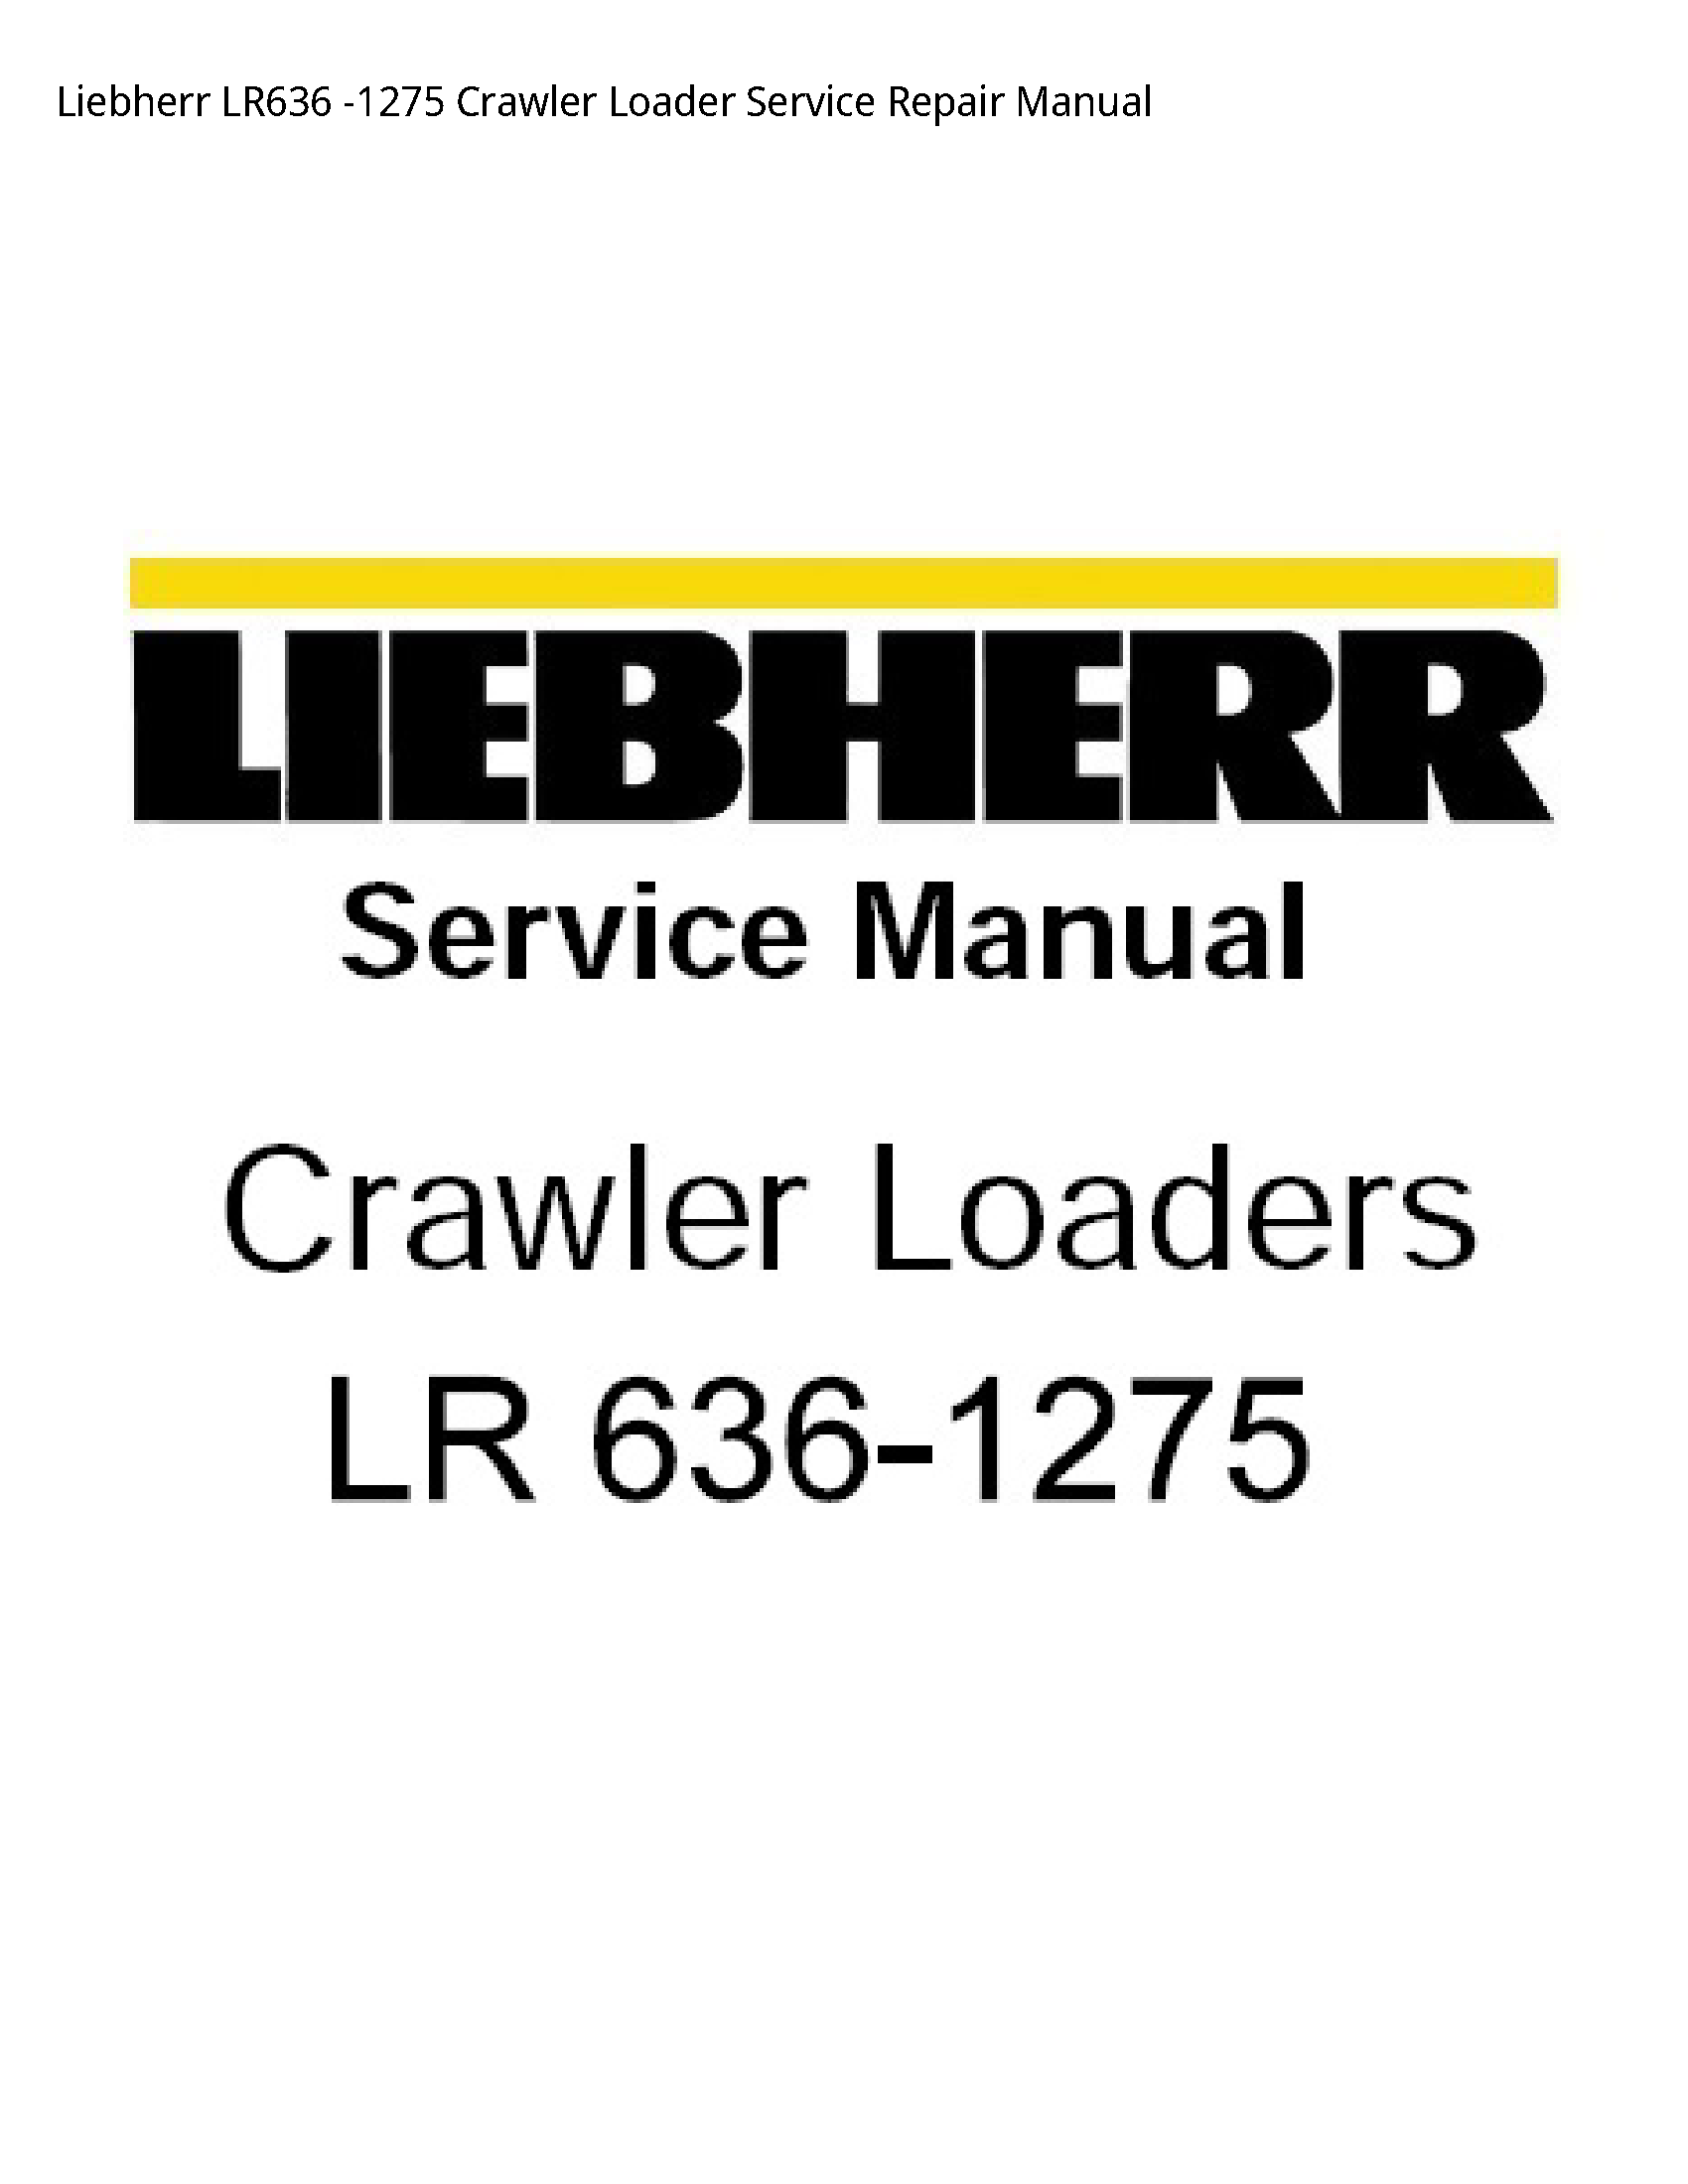 Liebherr LR636 Crawler Loader manual